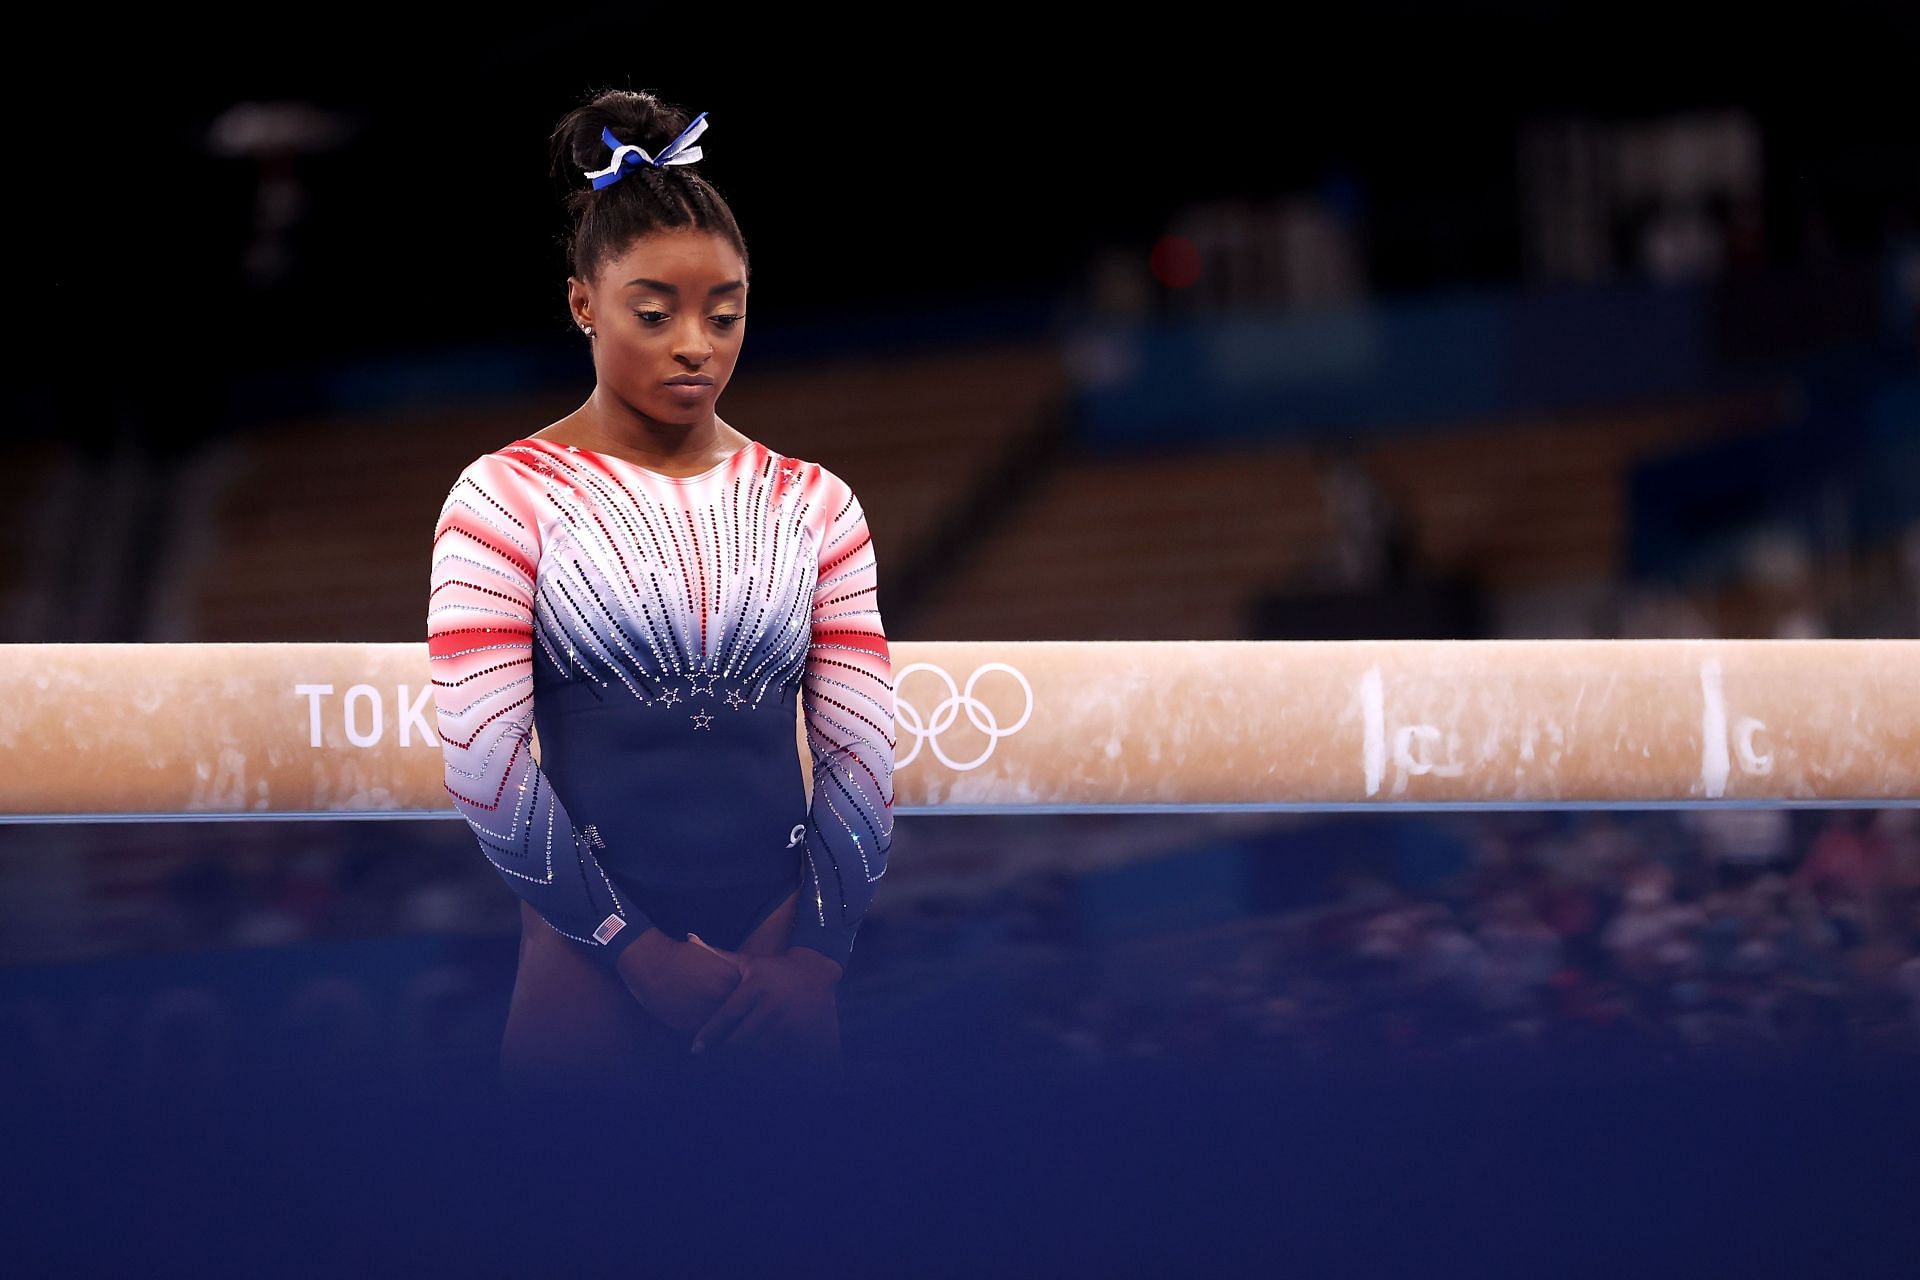 Simone Biles upset at the 2021 Tokyo Olympics